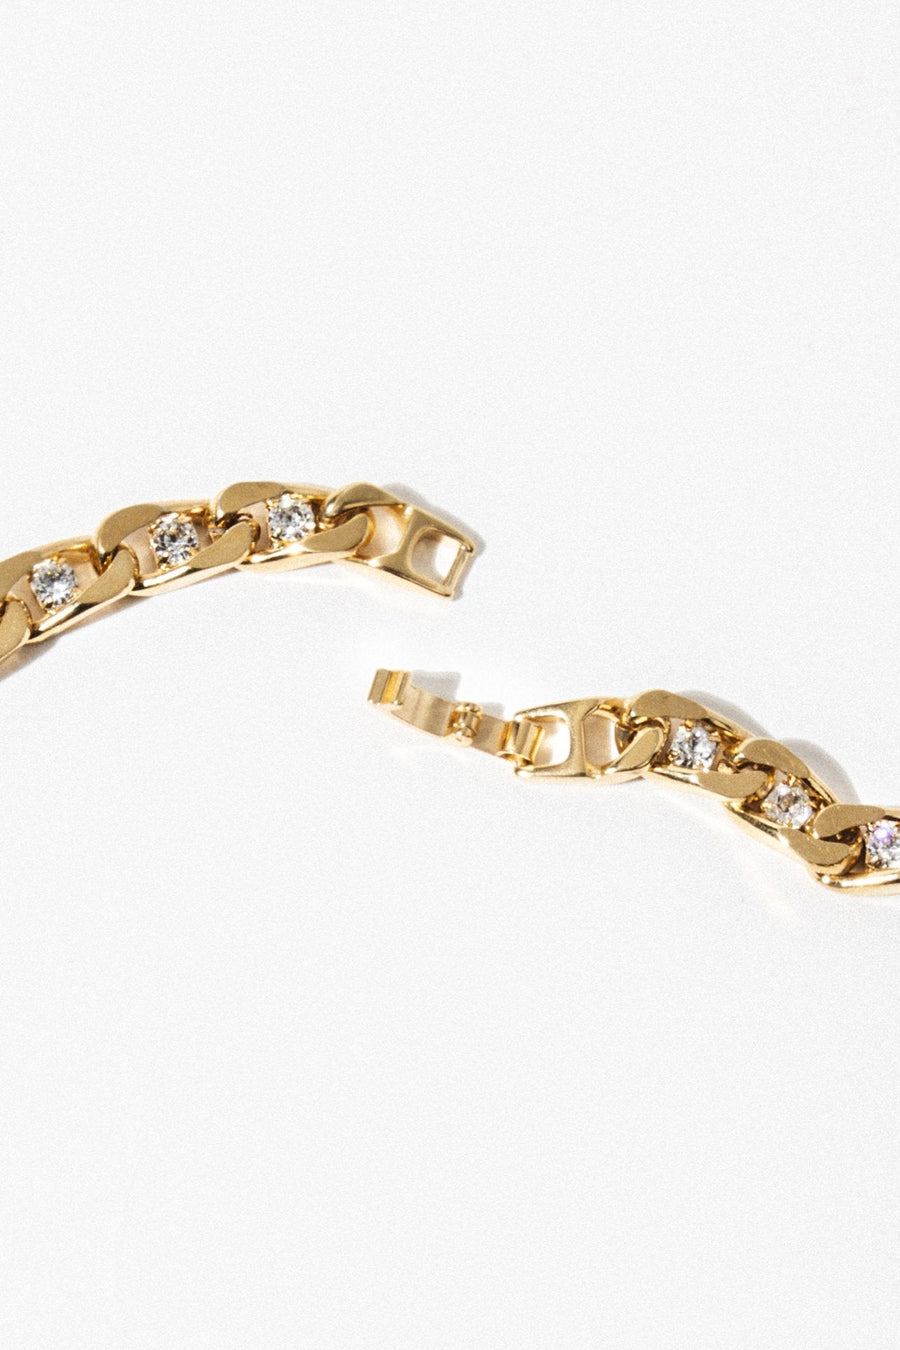 Goddess Jewelry Gold A Palm Springs Story Necklace